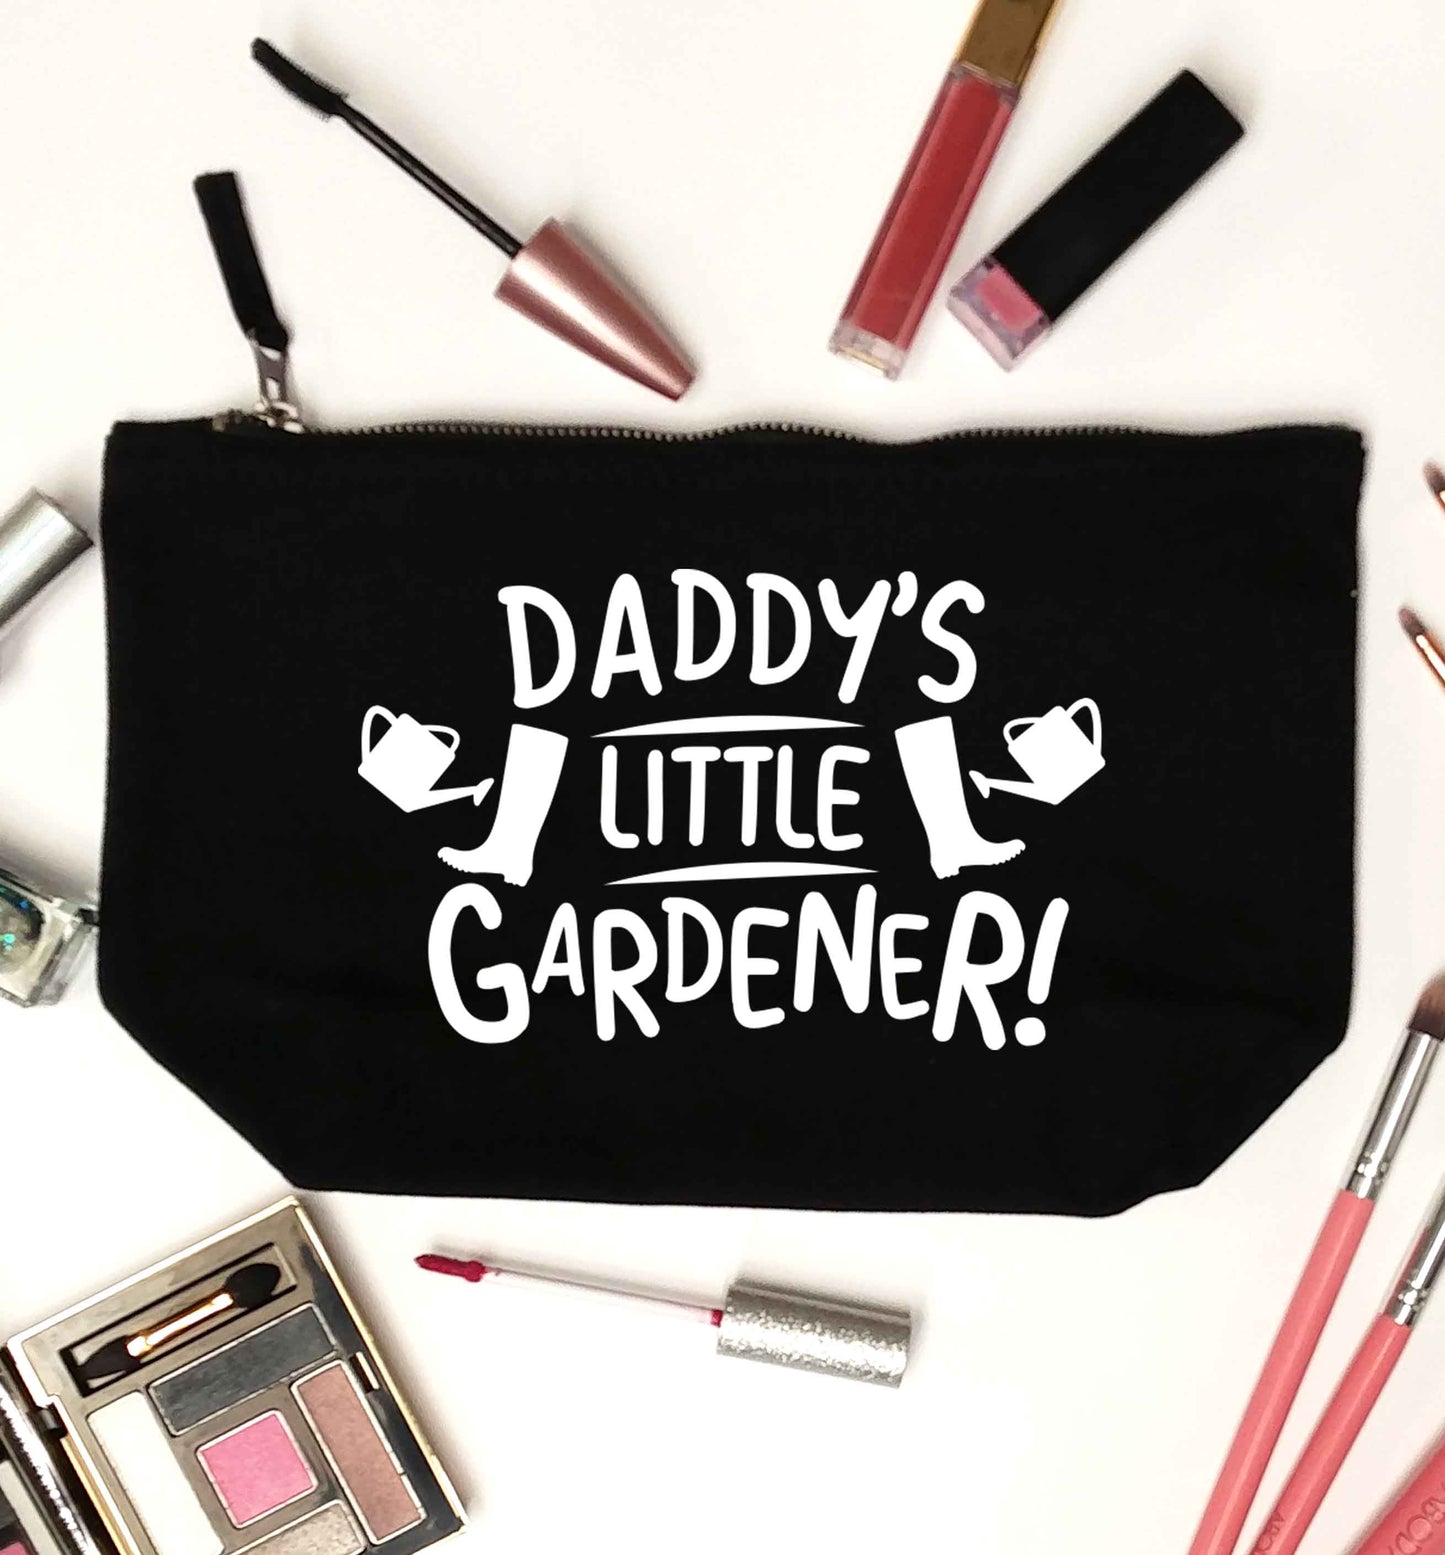 Daddy's little gardener black makeup bag